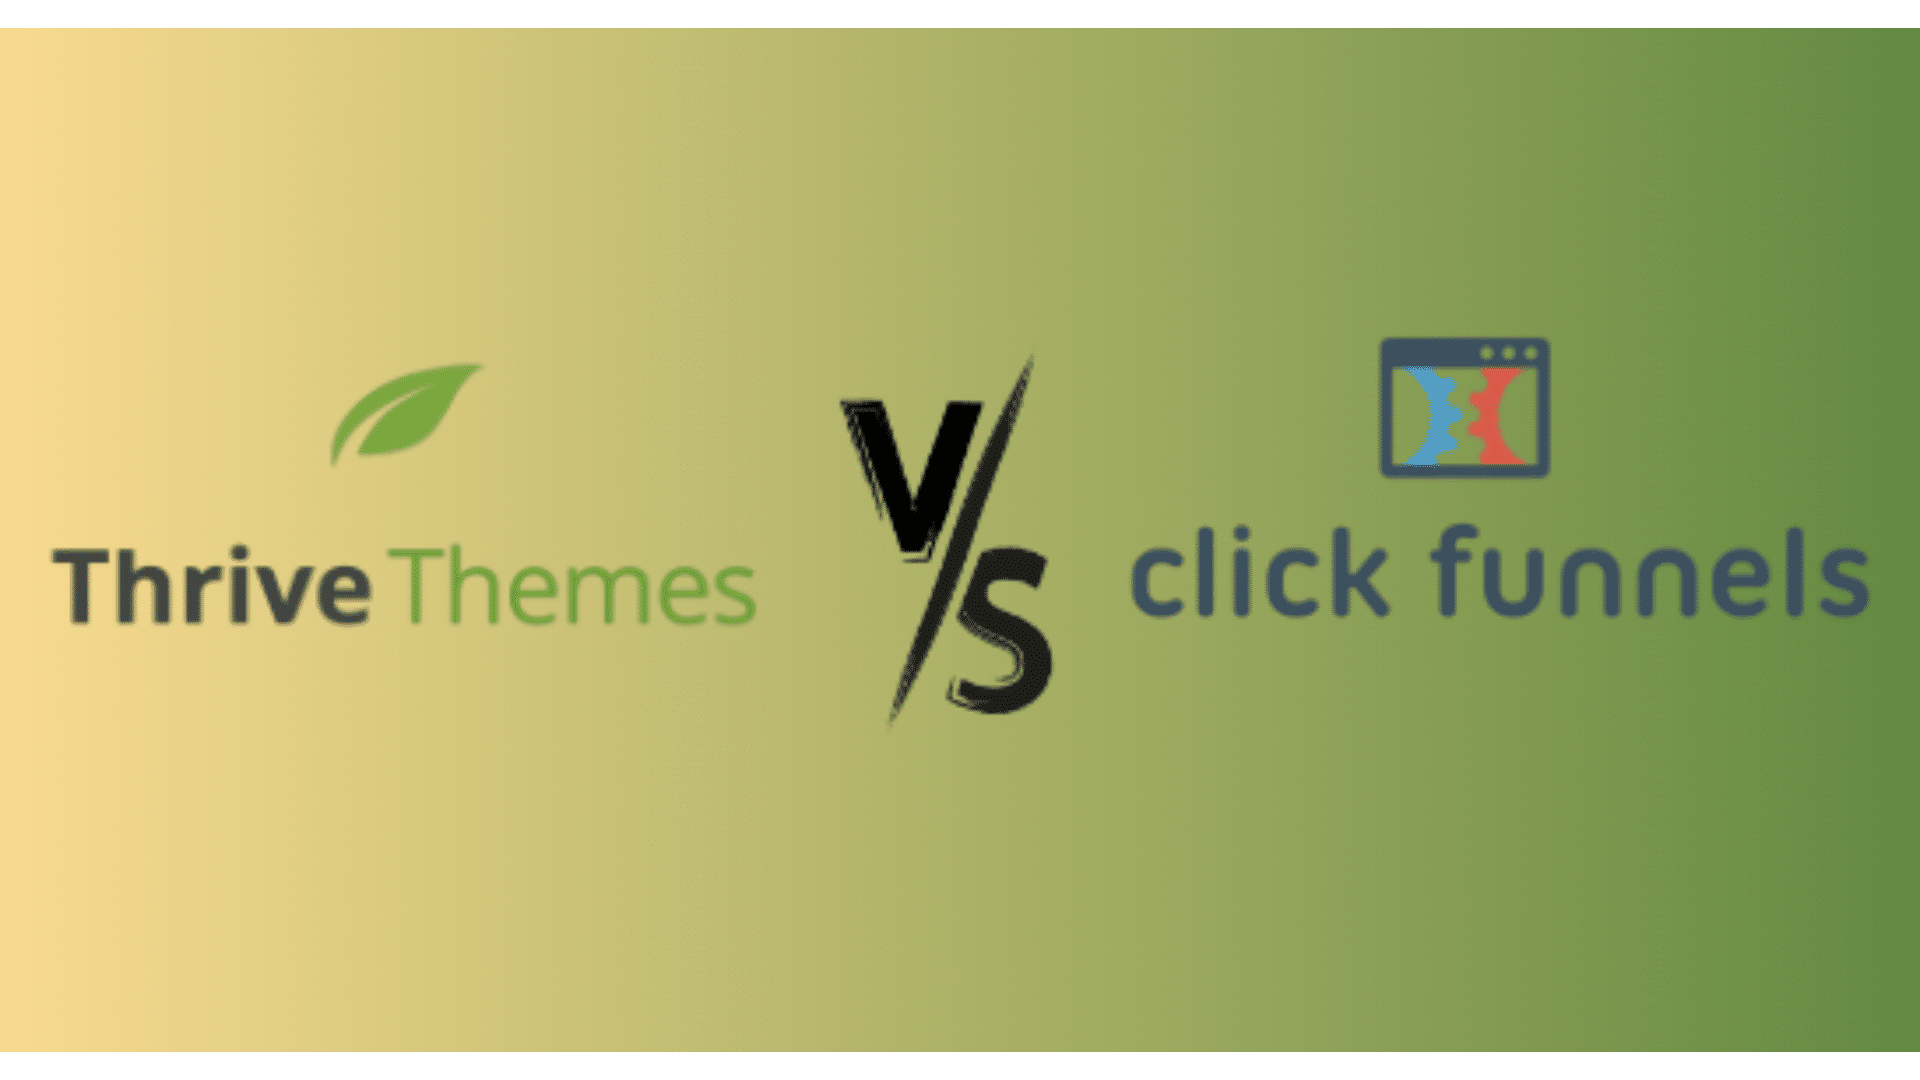 thrive themes vs clickfunnels